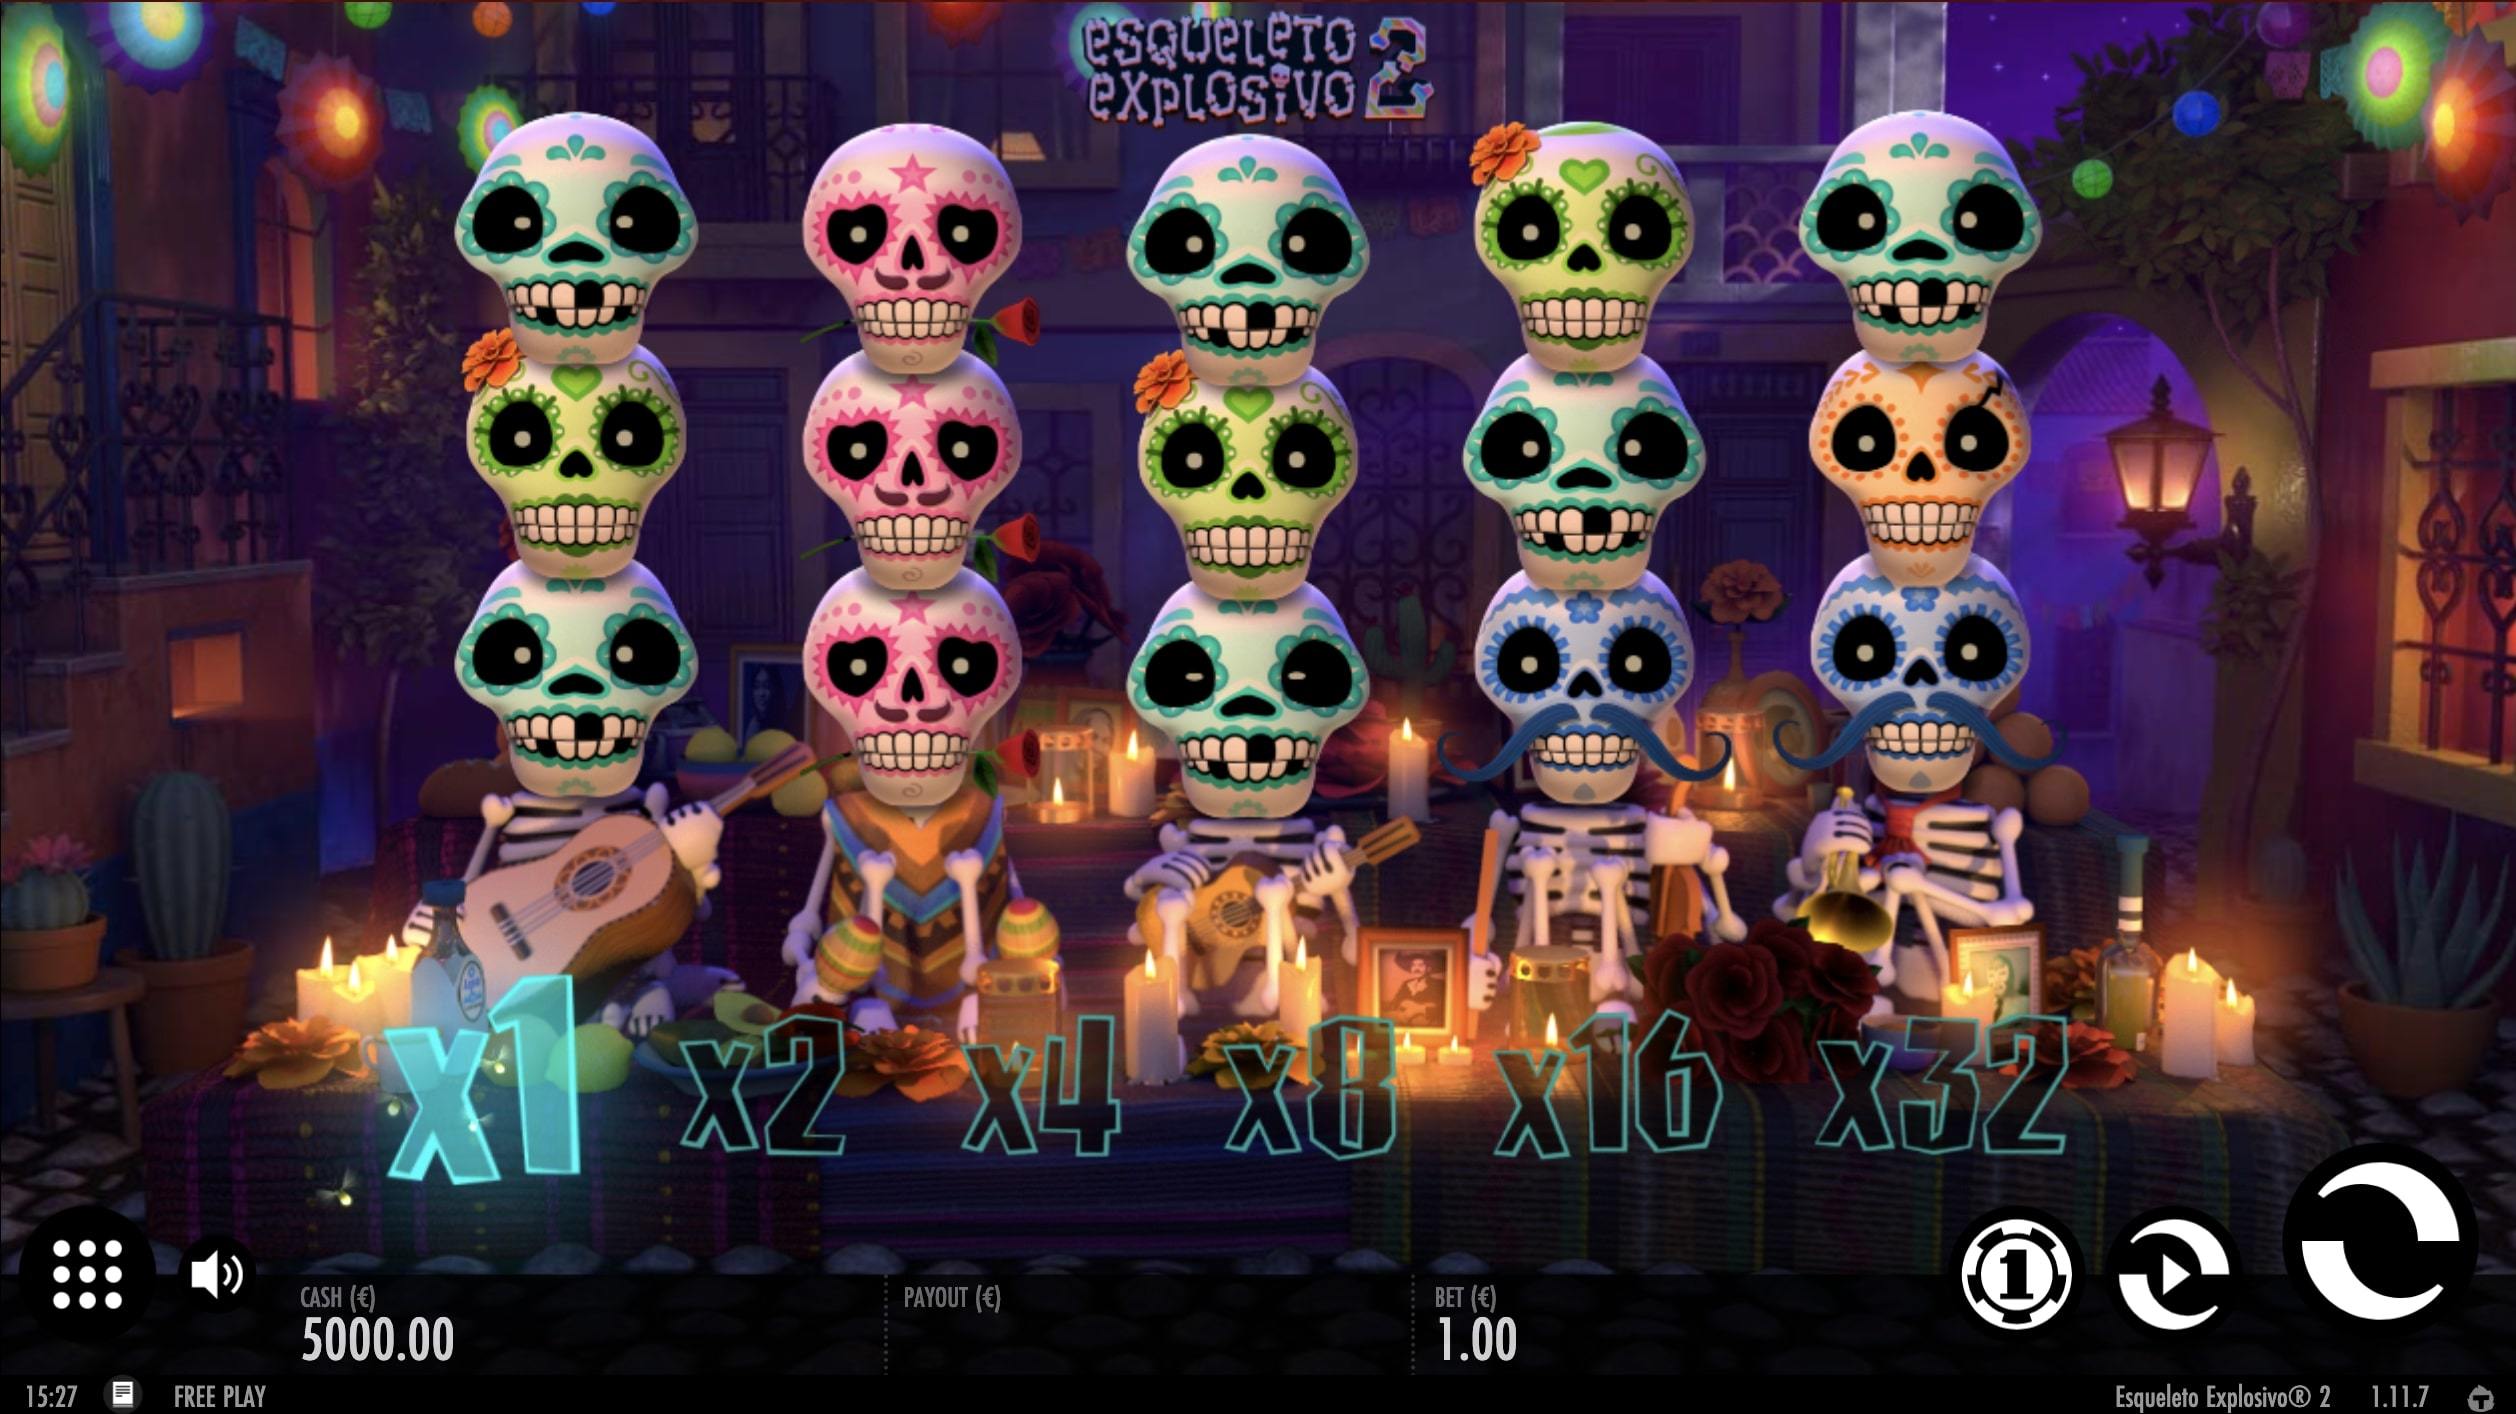  Esqueleto Explosivo 2 Slot Overview